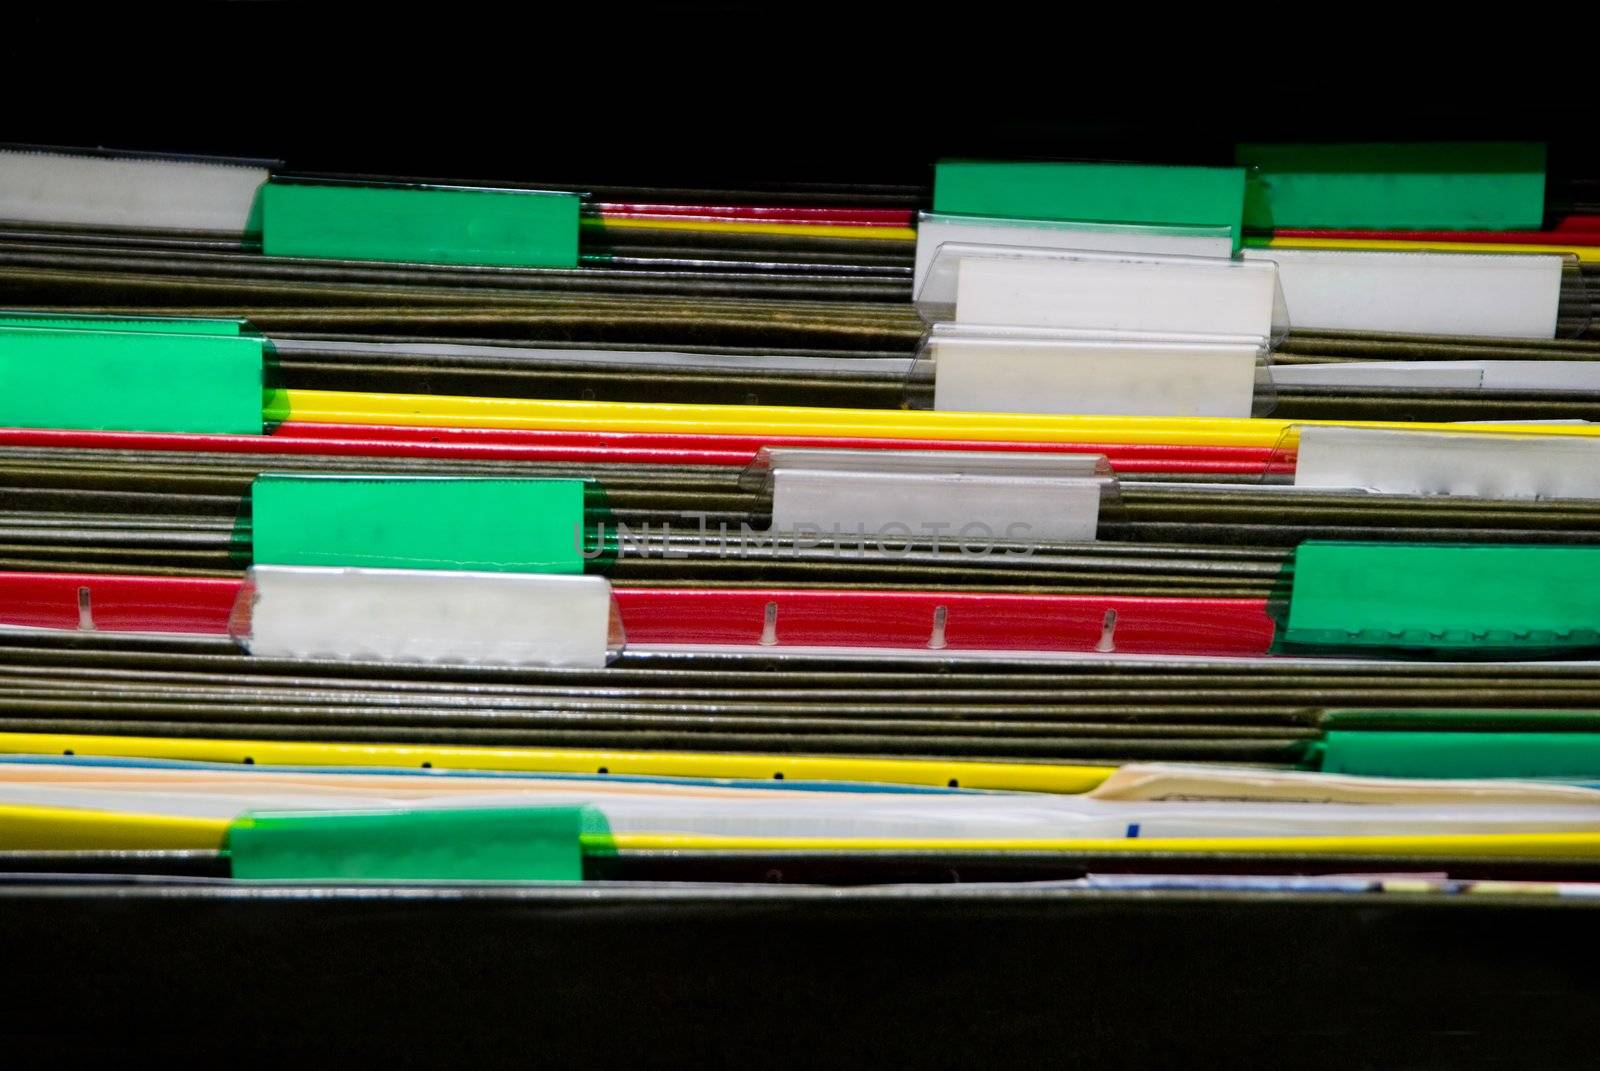 A set of organized file folders in an office